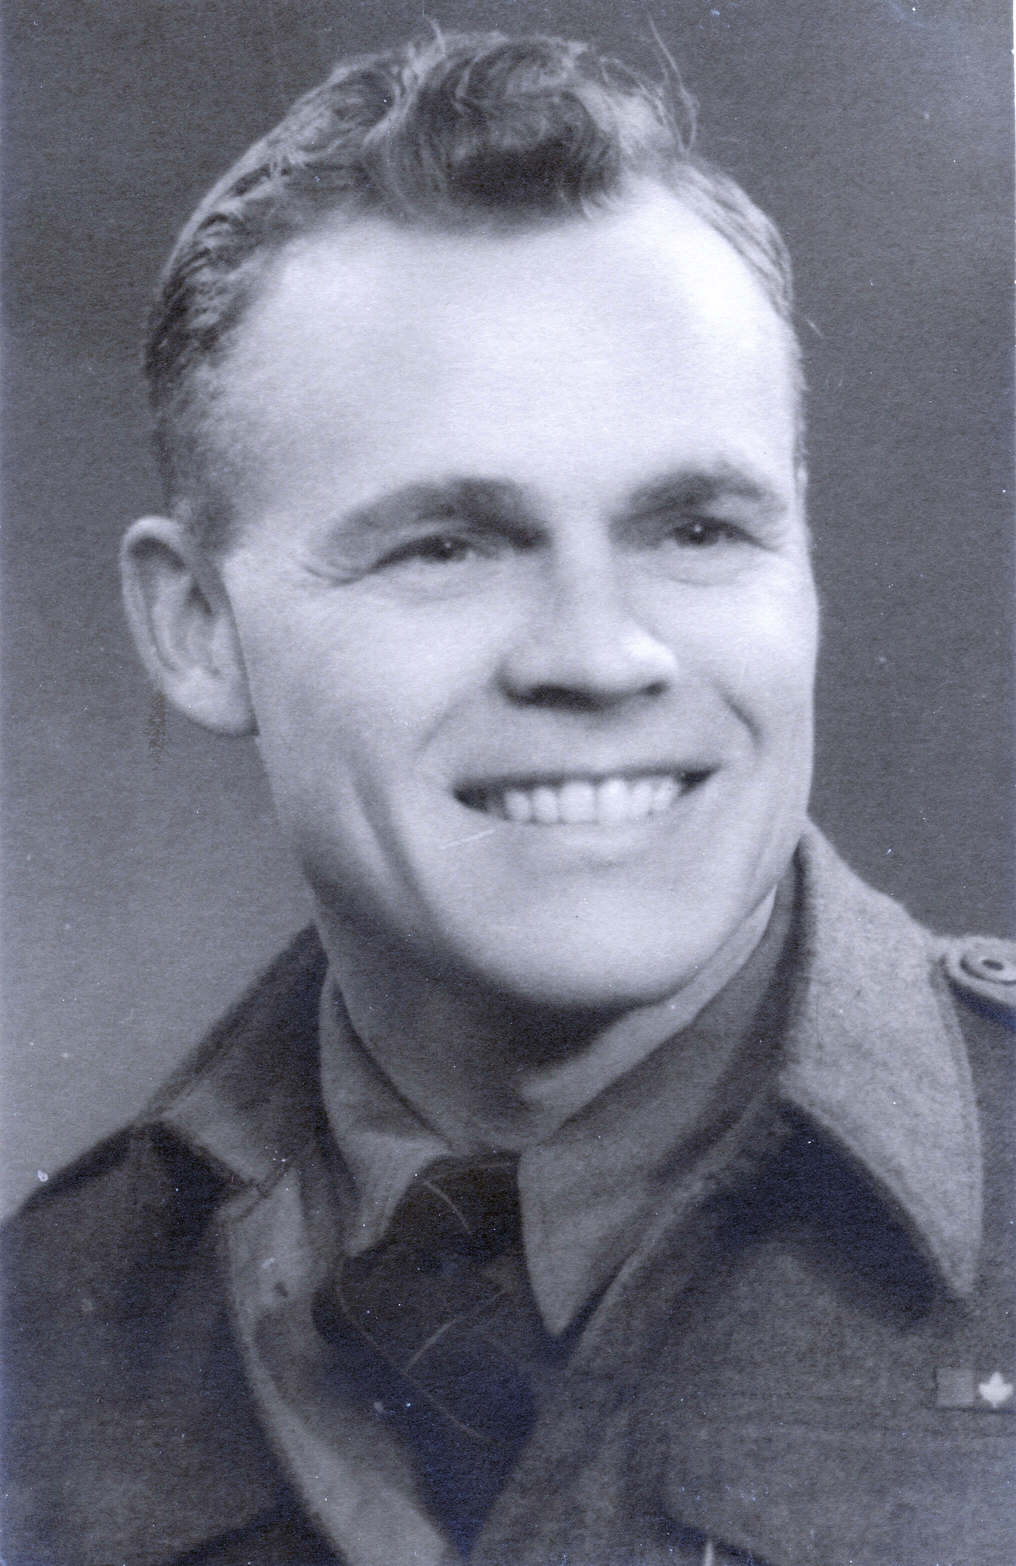 Captain George W. Pollard